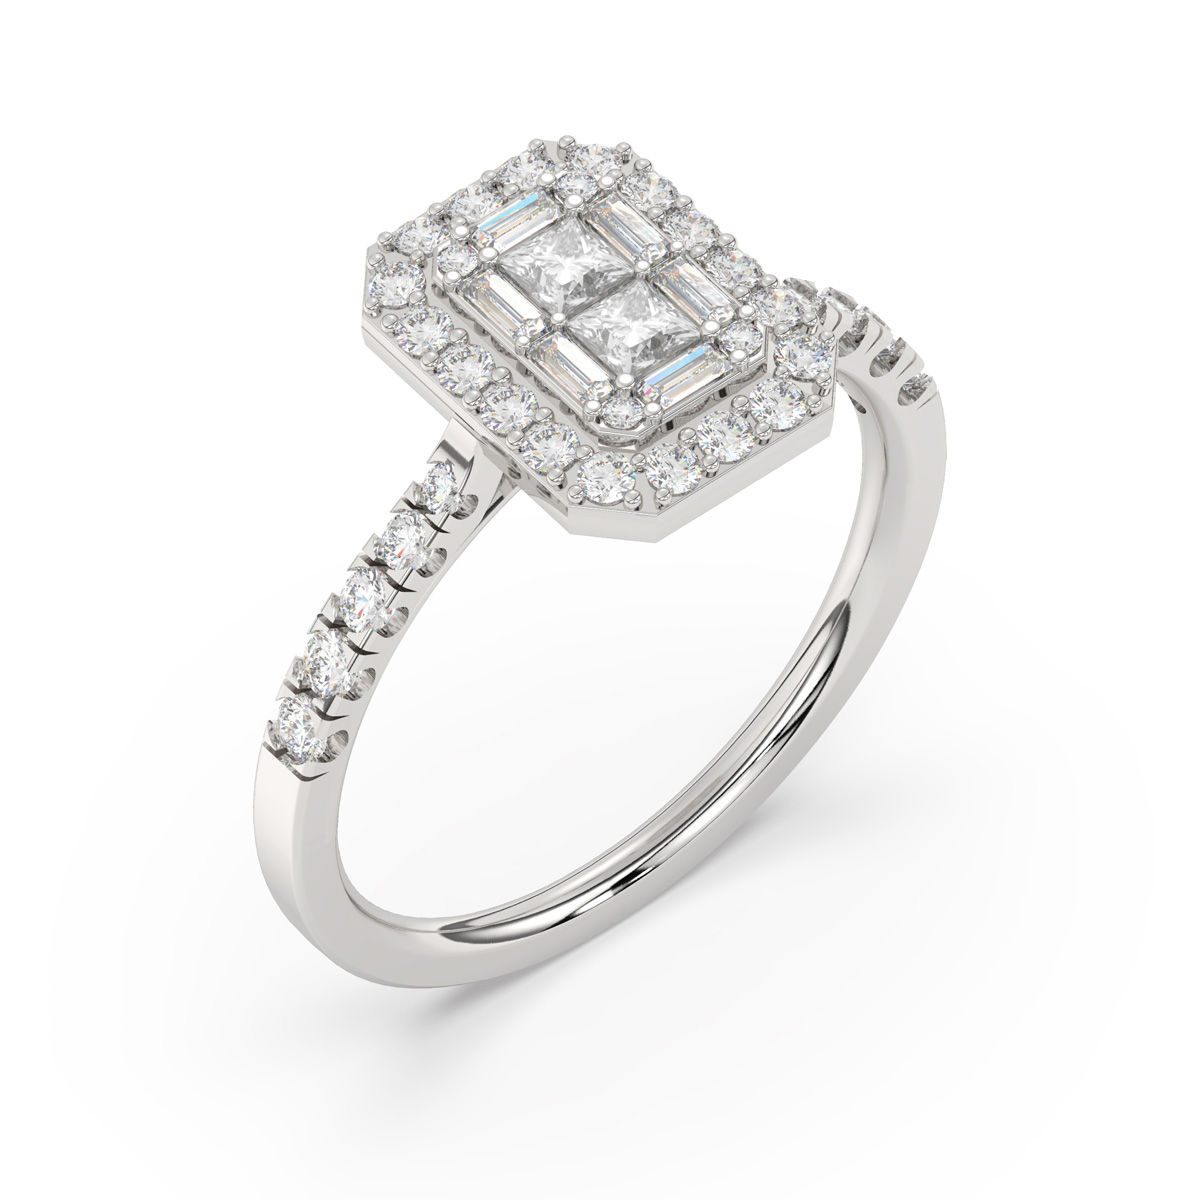 FI52575RWD4WP
14K white gold diamond ring